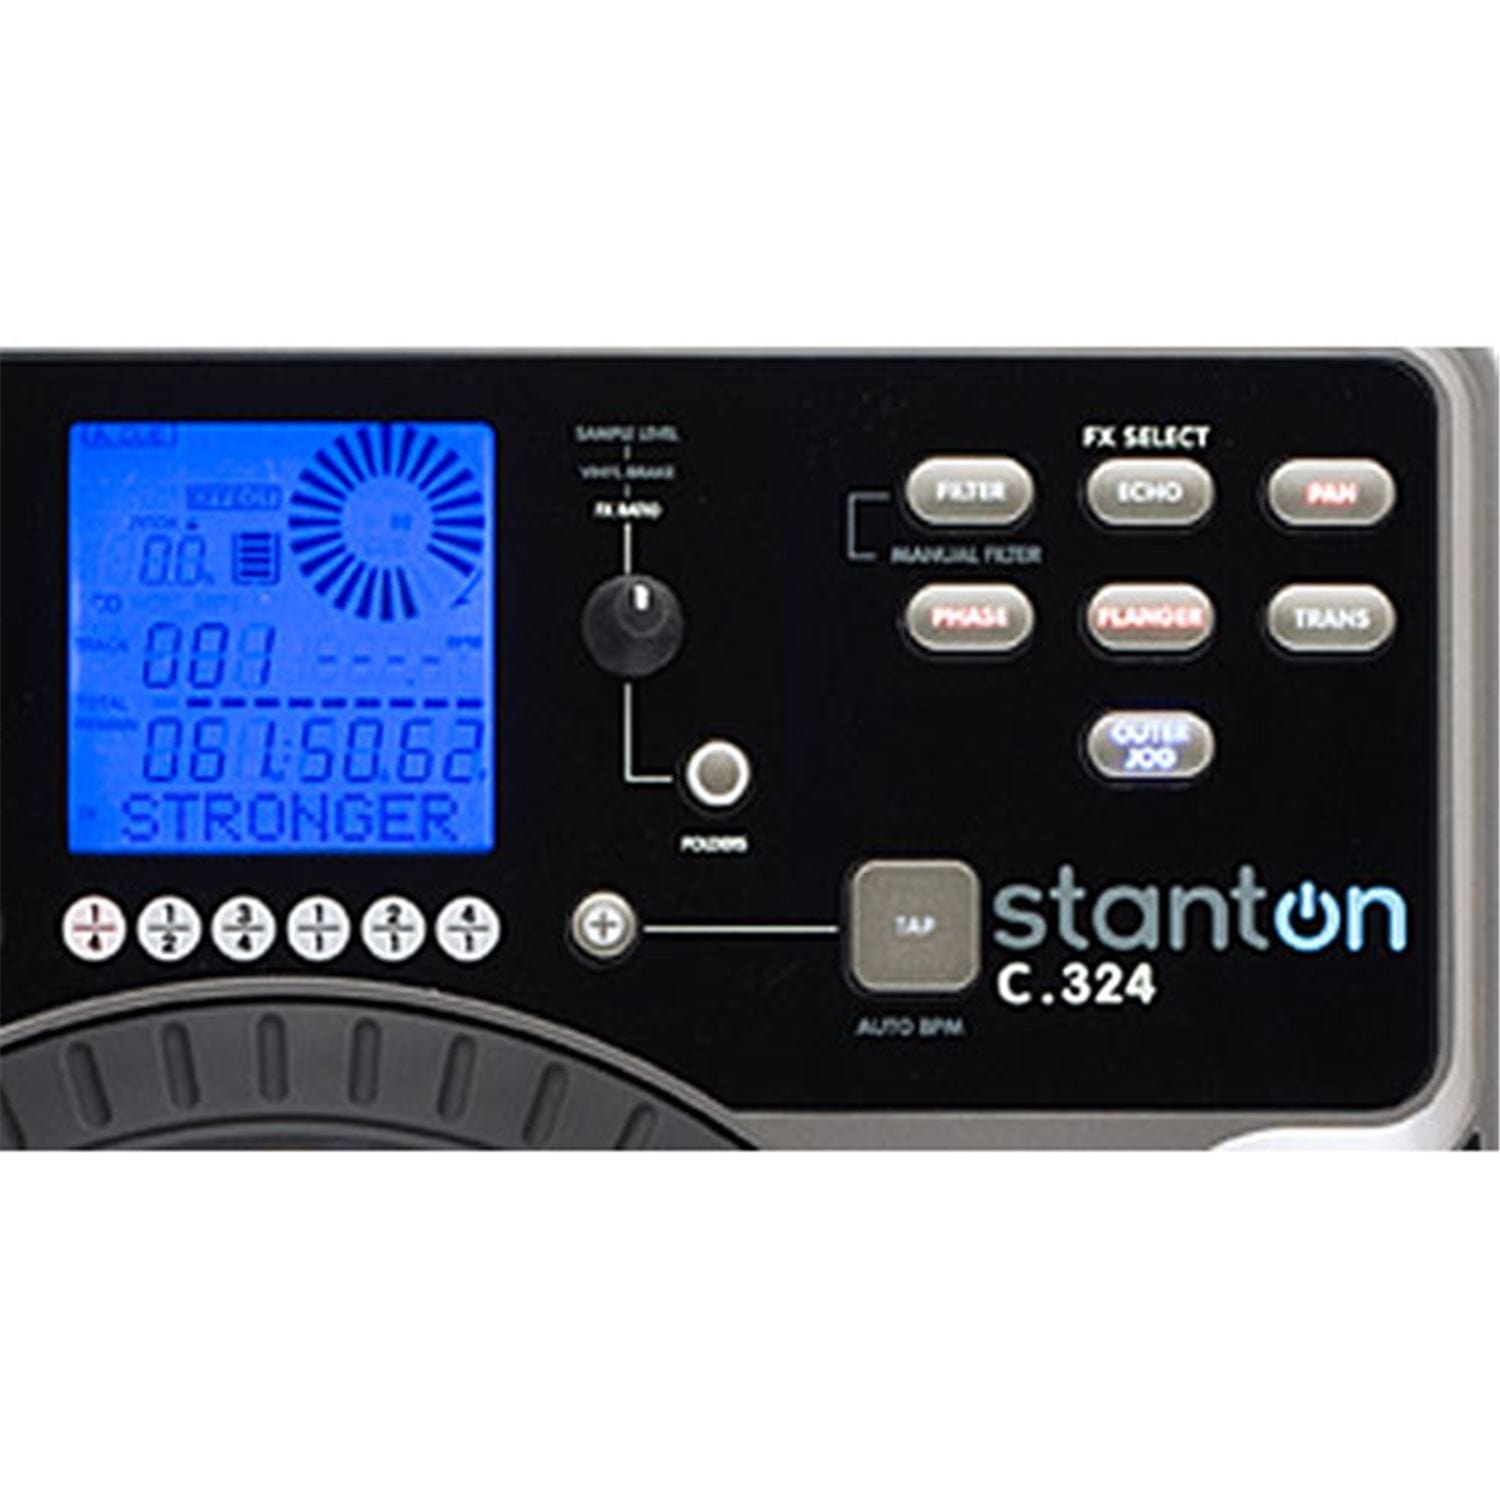 Stanton C-324 Tabletop CD/MP3 Player